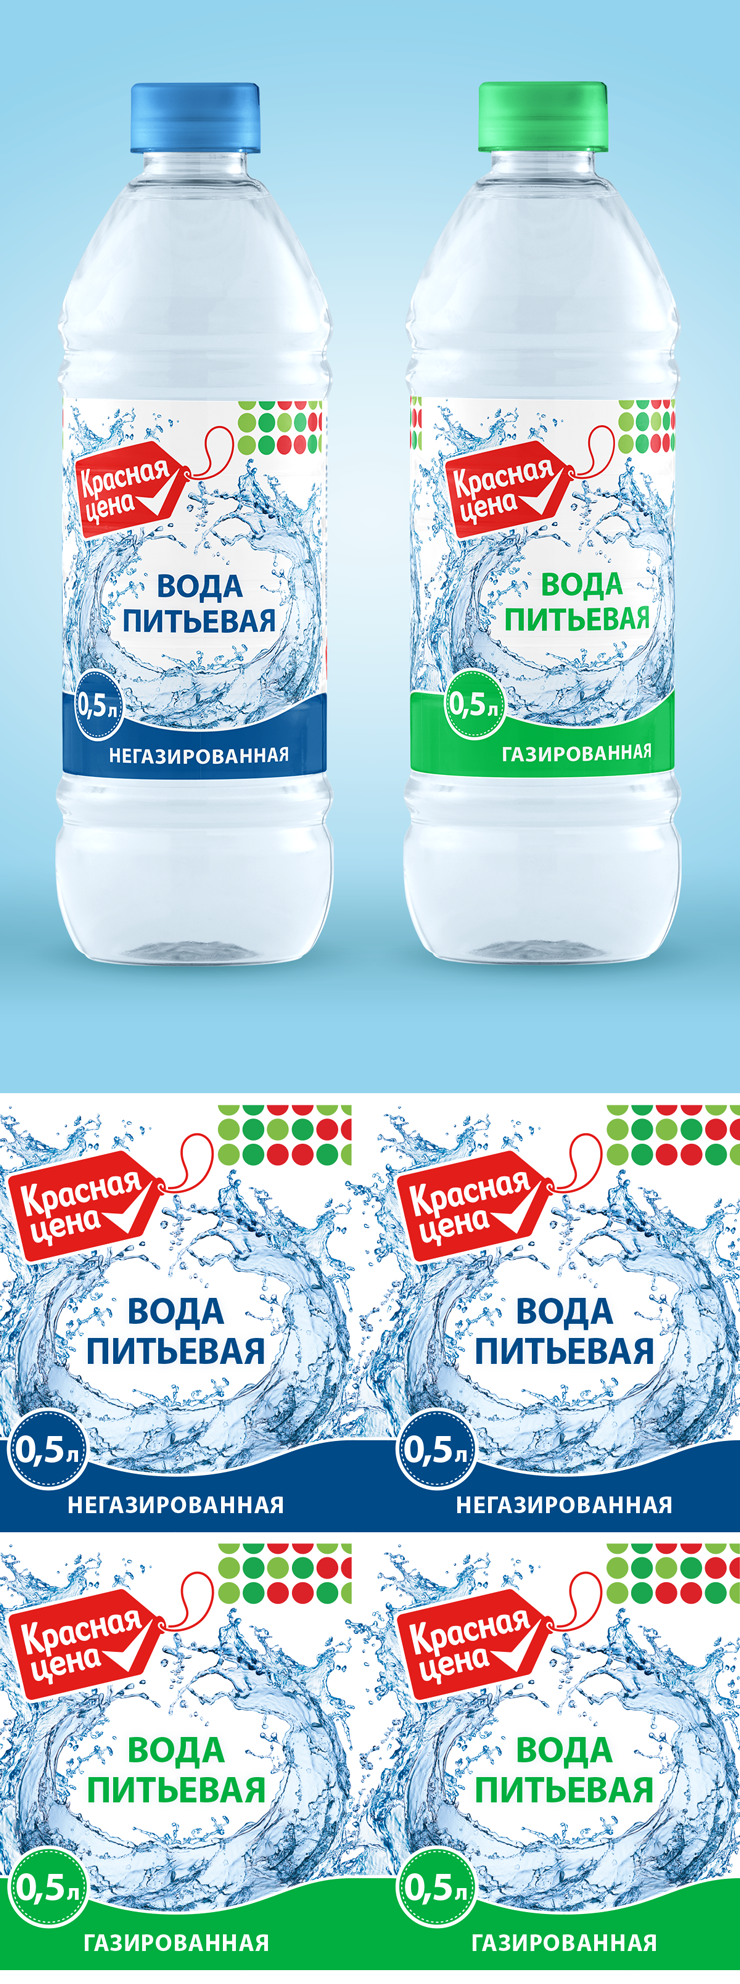 Krasnaya Tsena Packaging Label design Pack Food  juice beverage Tomato